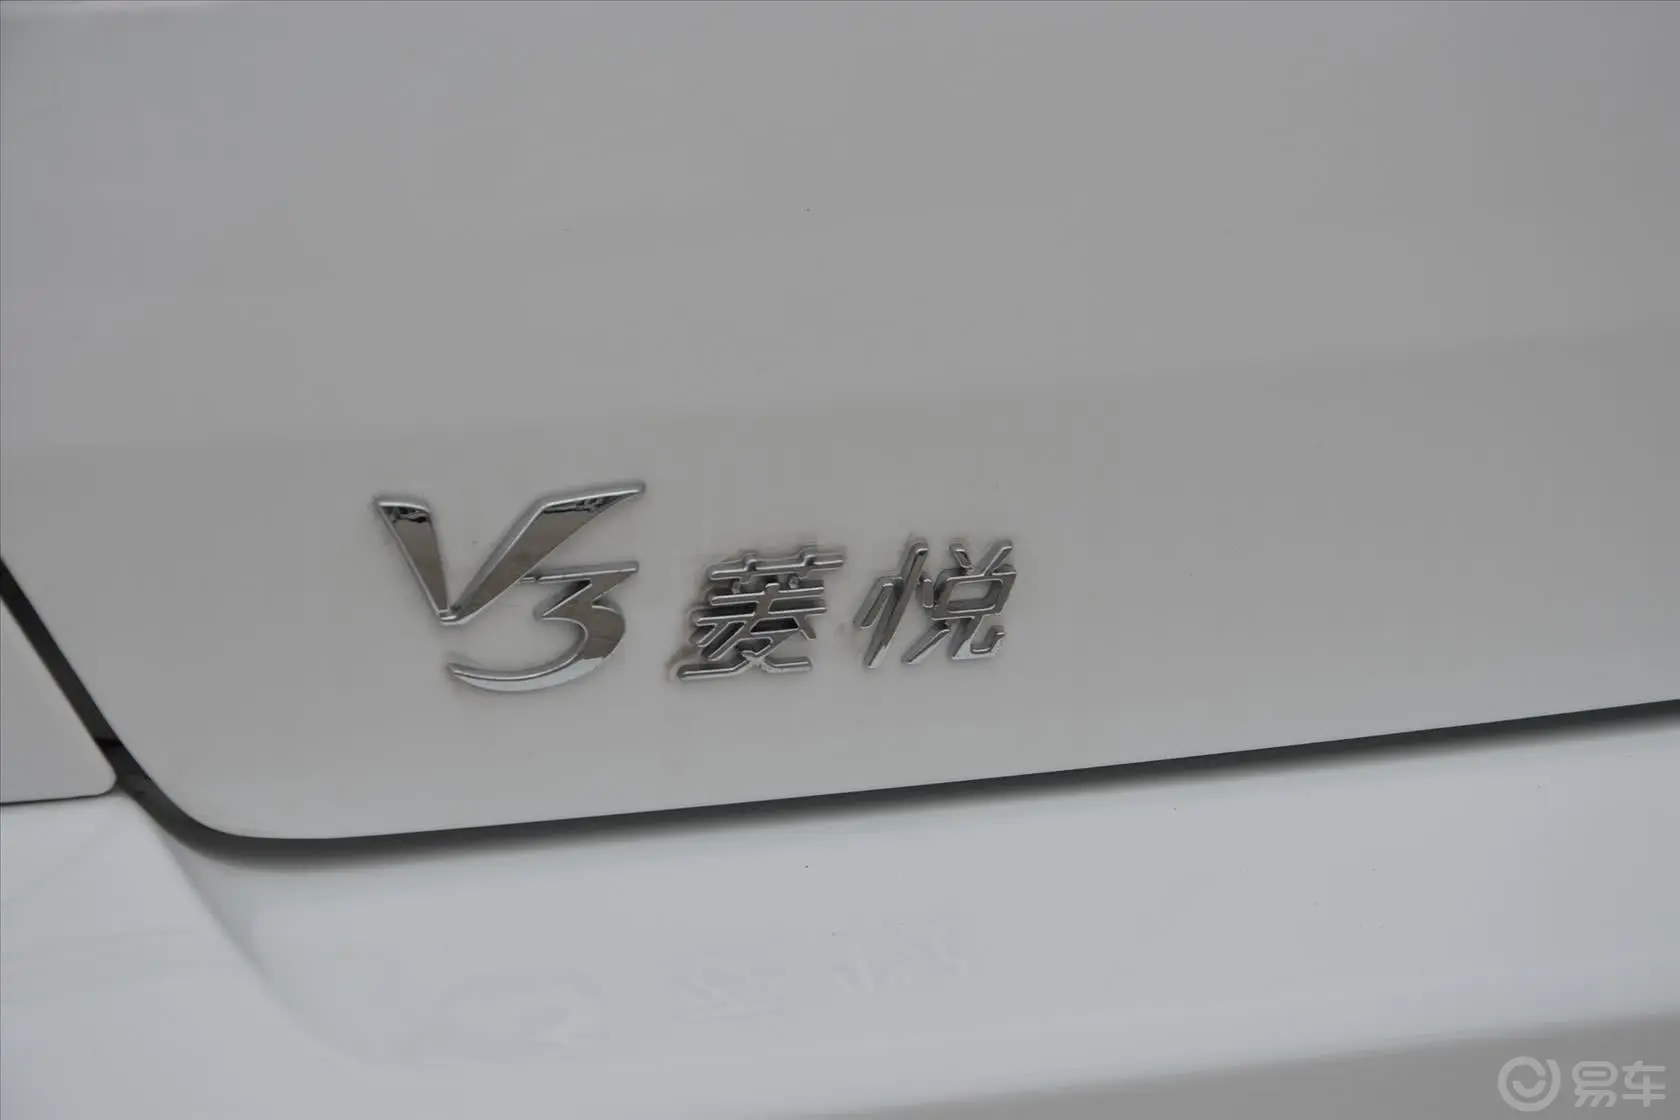 V3菱悦1.5L 6AT 幸福版尾标